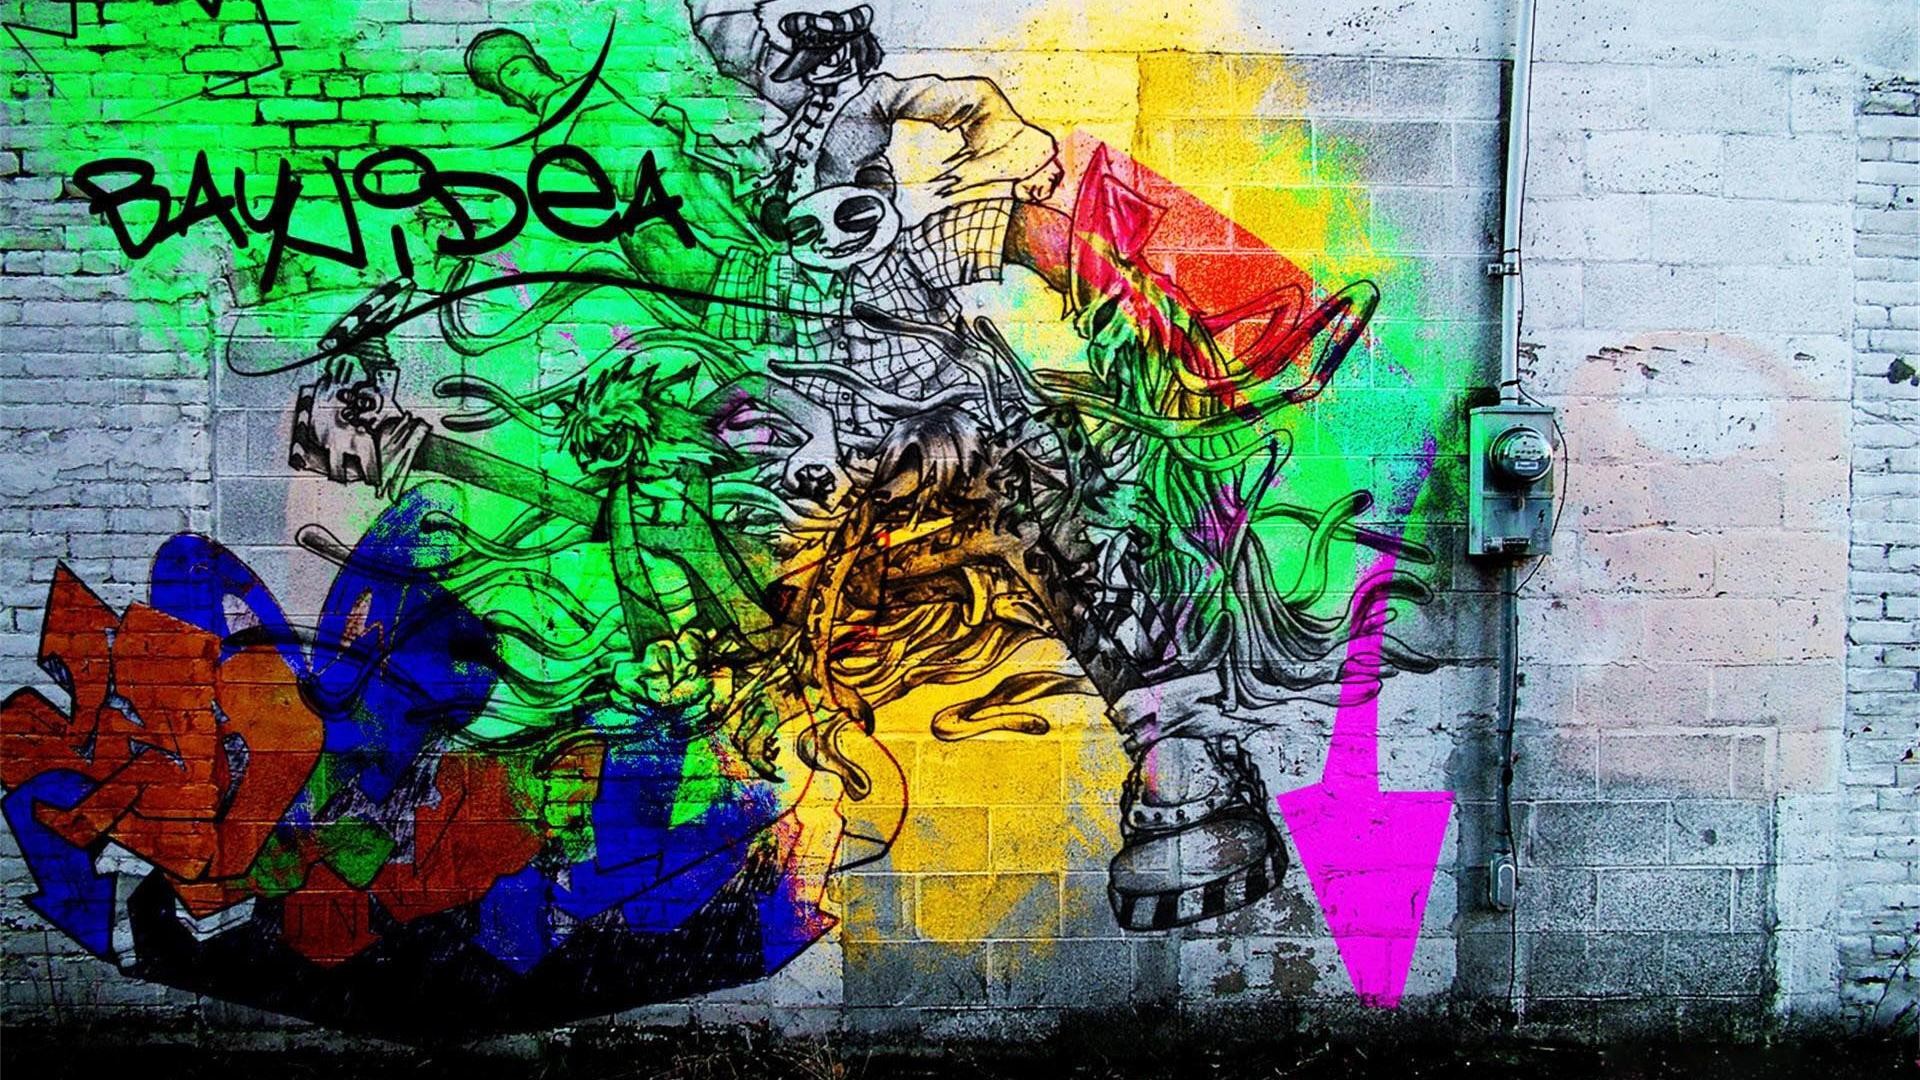 graffiti wallpaper desktops laptop wallpapers images 1920×1080